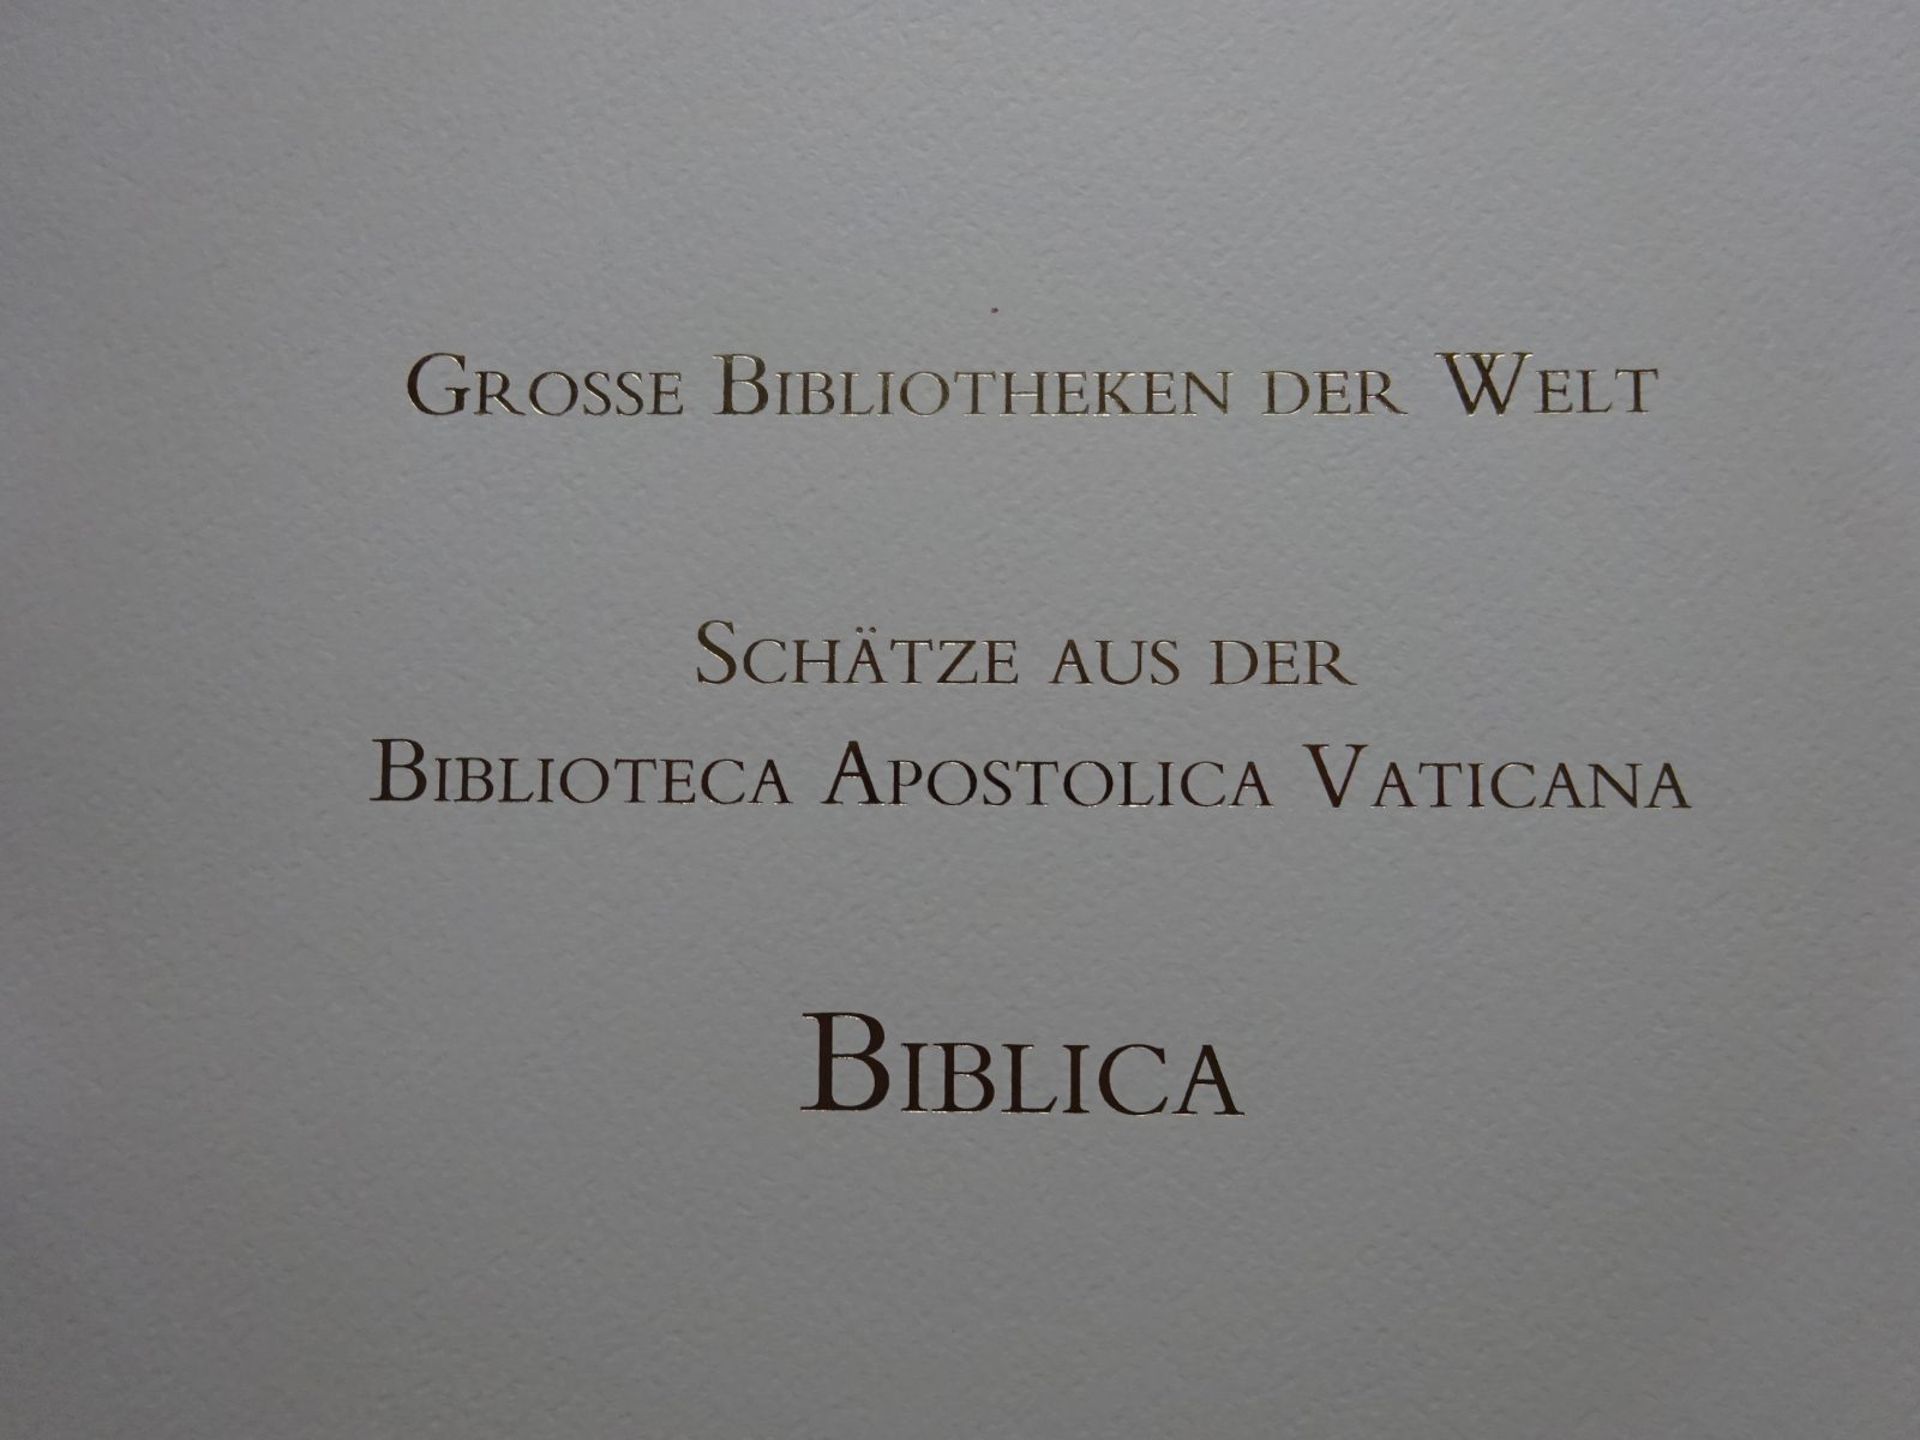 Biblioteca Apostolica Biblica - Image 4 of 9